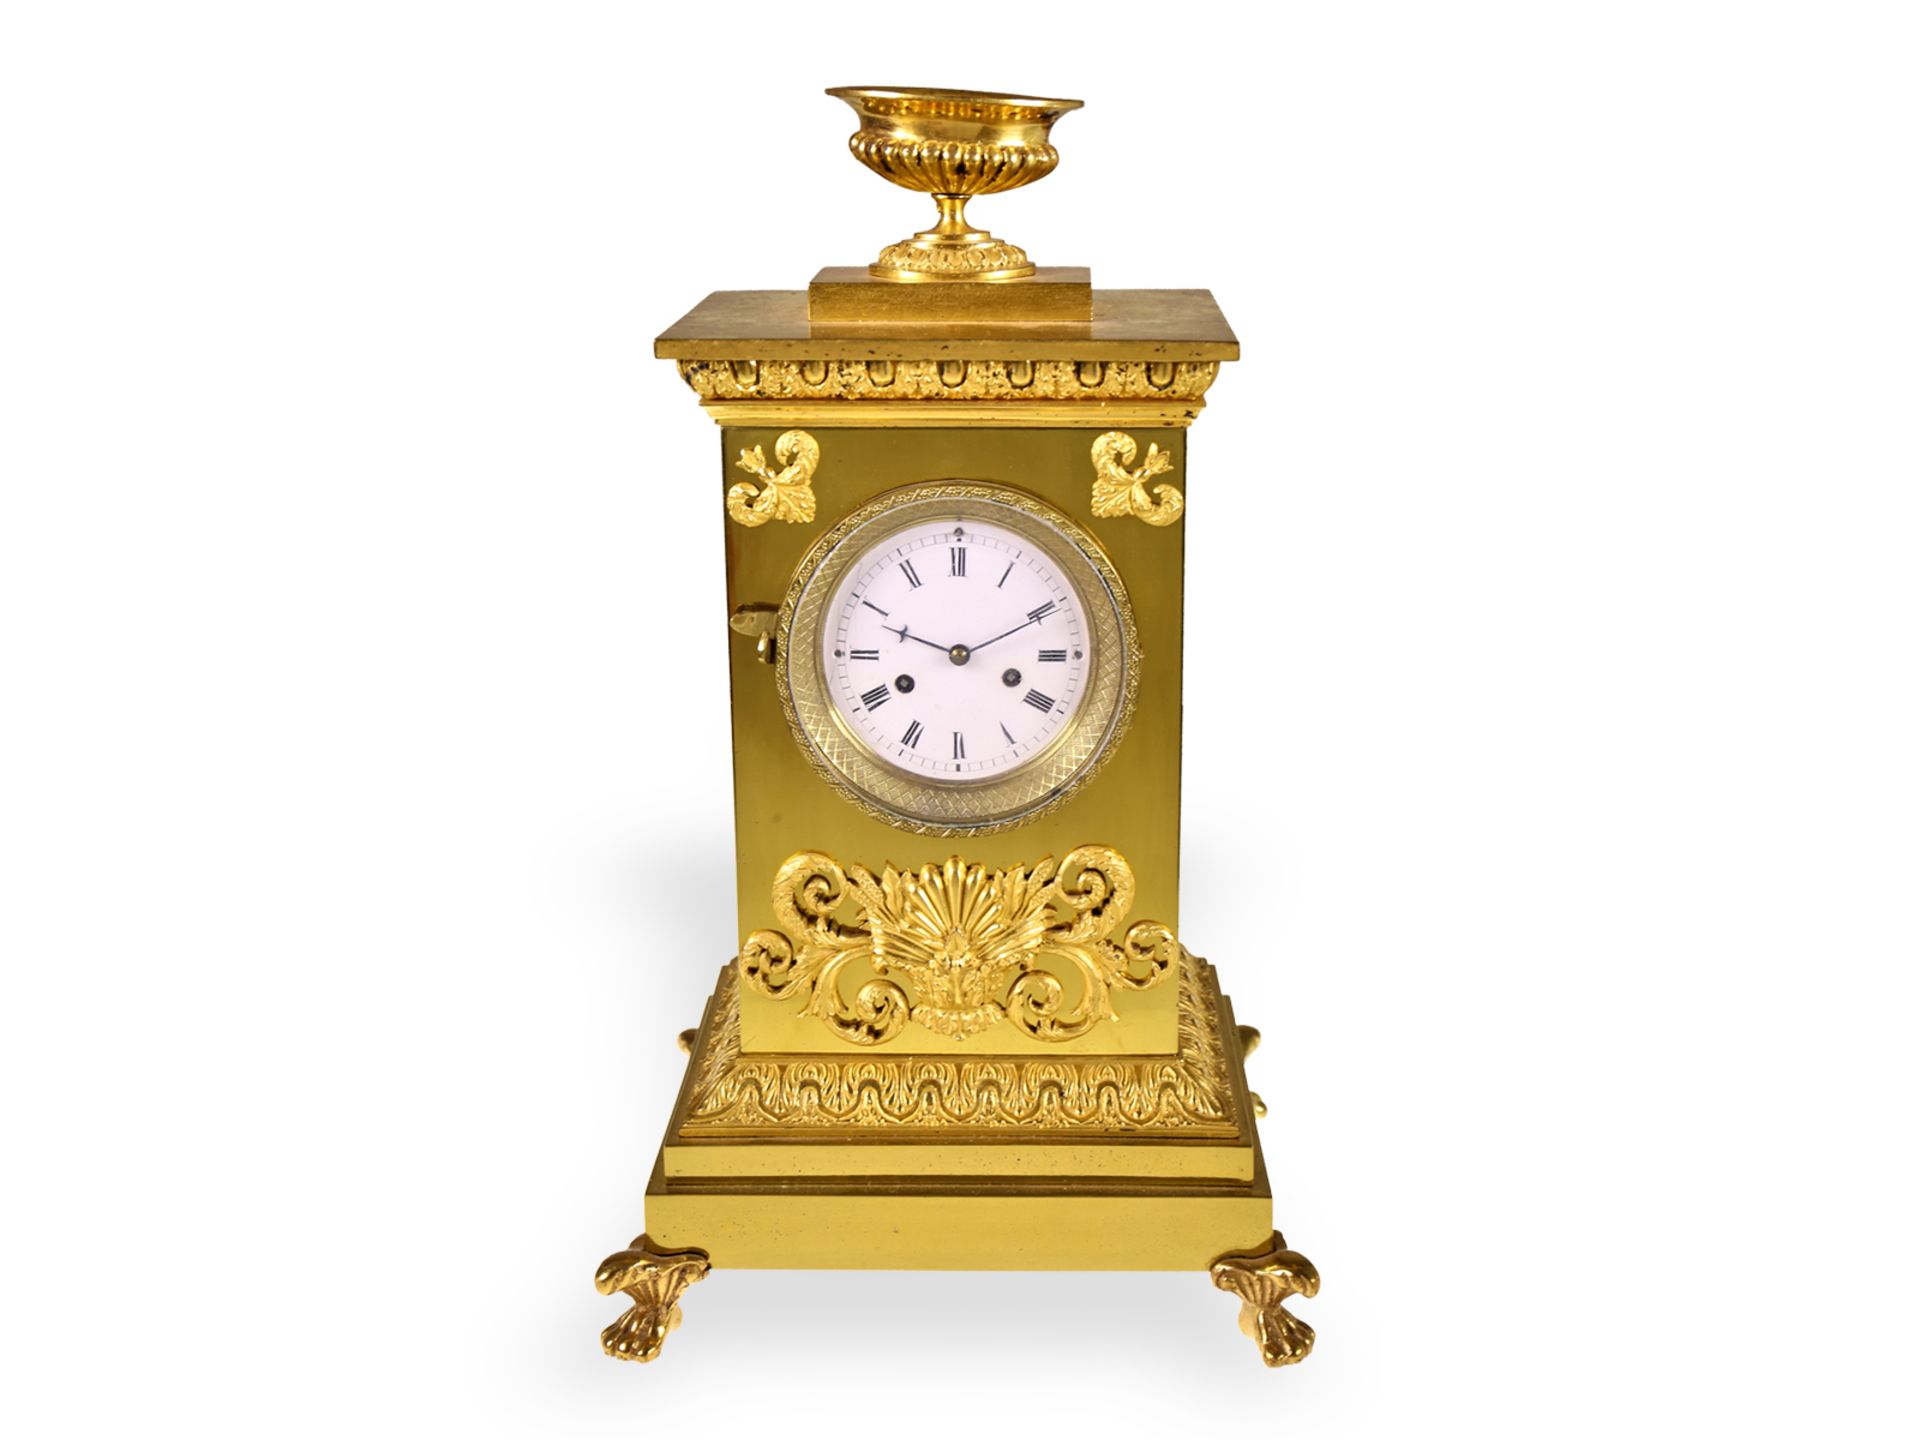 Table clock: decorative fire-gilt bronze clock around 1800, signed Miller Vienna